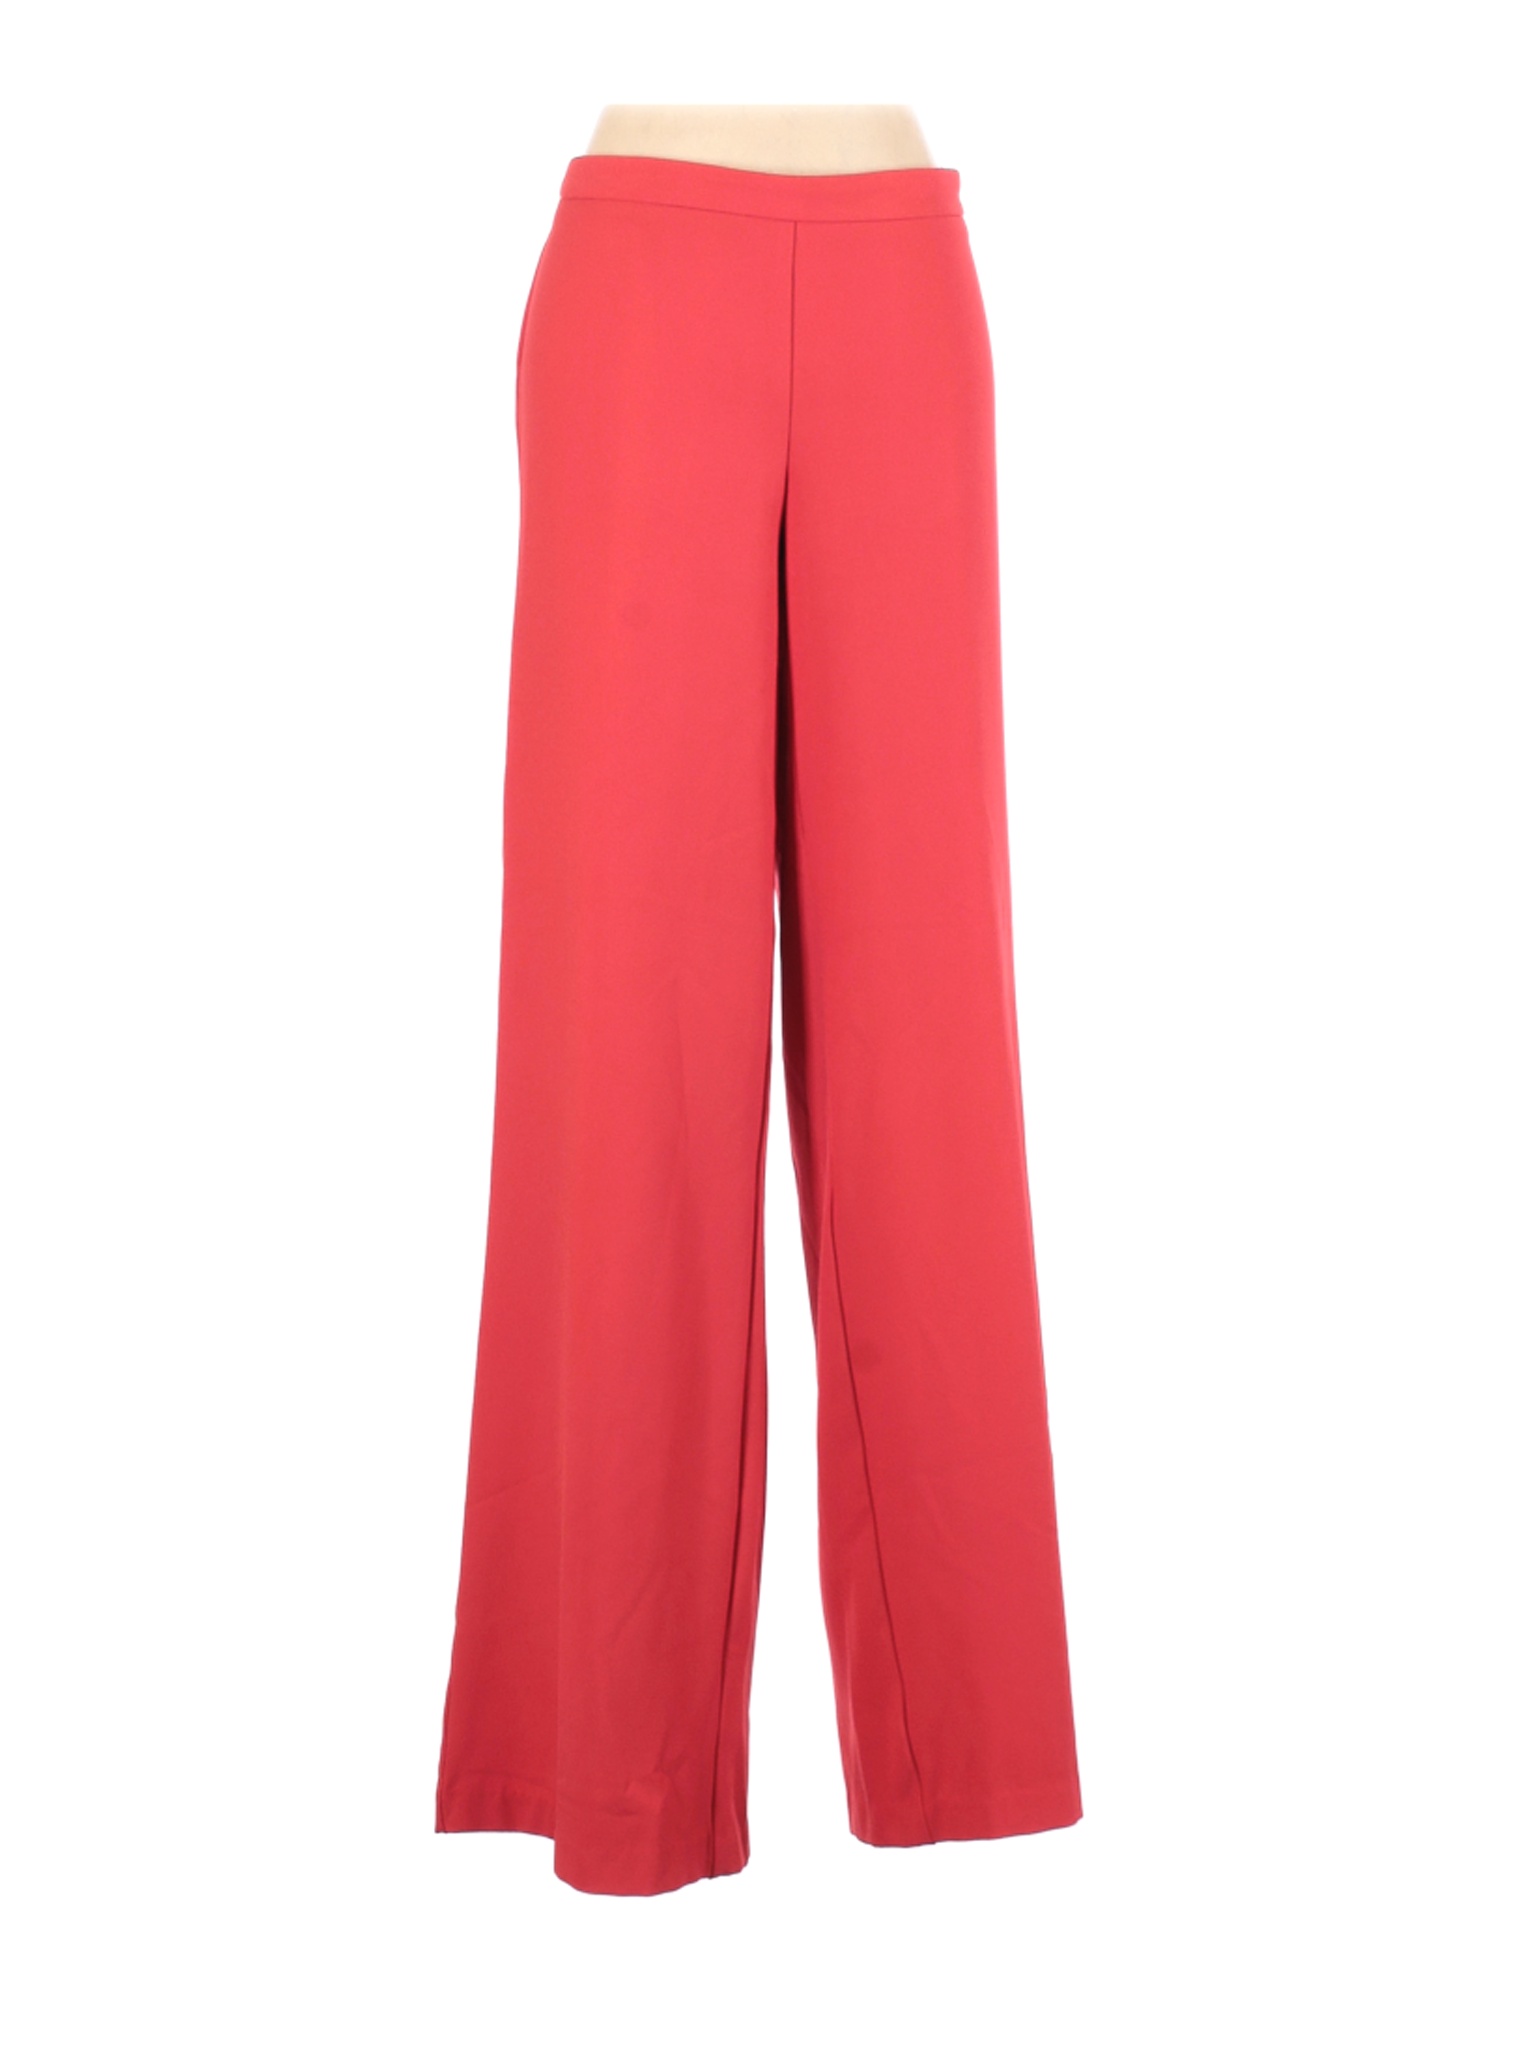 Dalia Collection Women Pink Casual Pants 8 | eBay